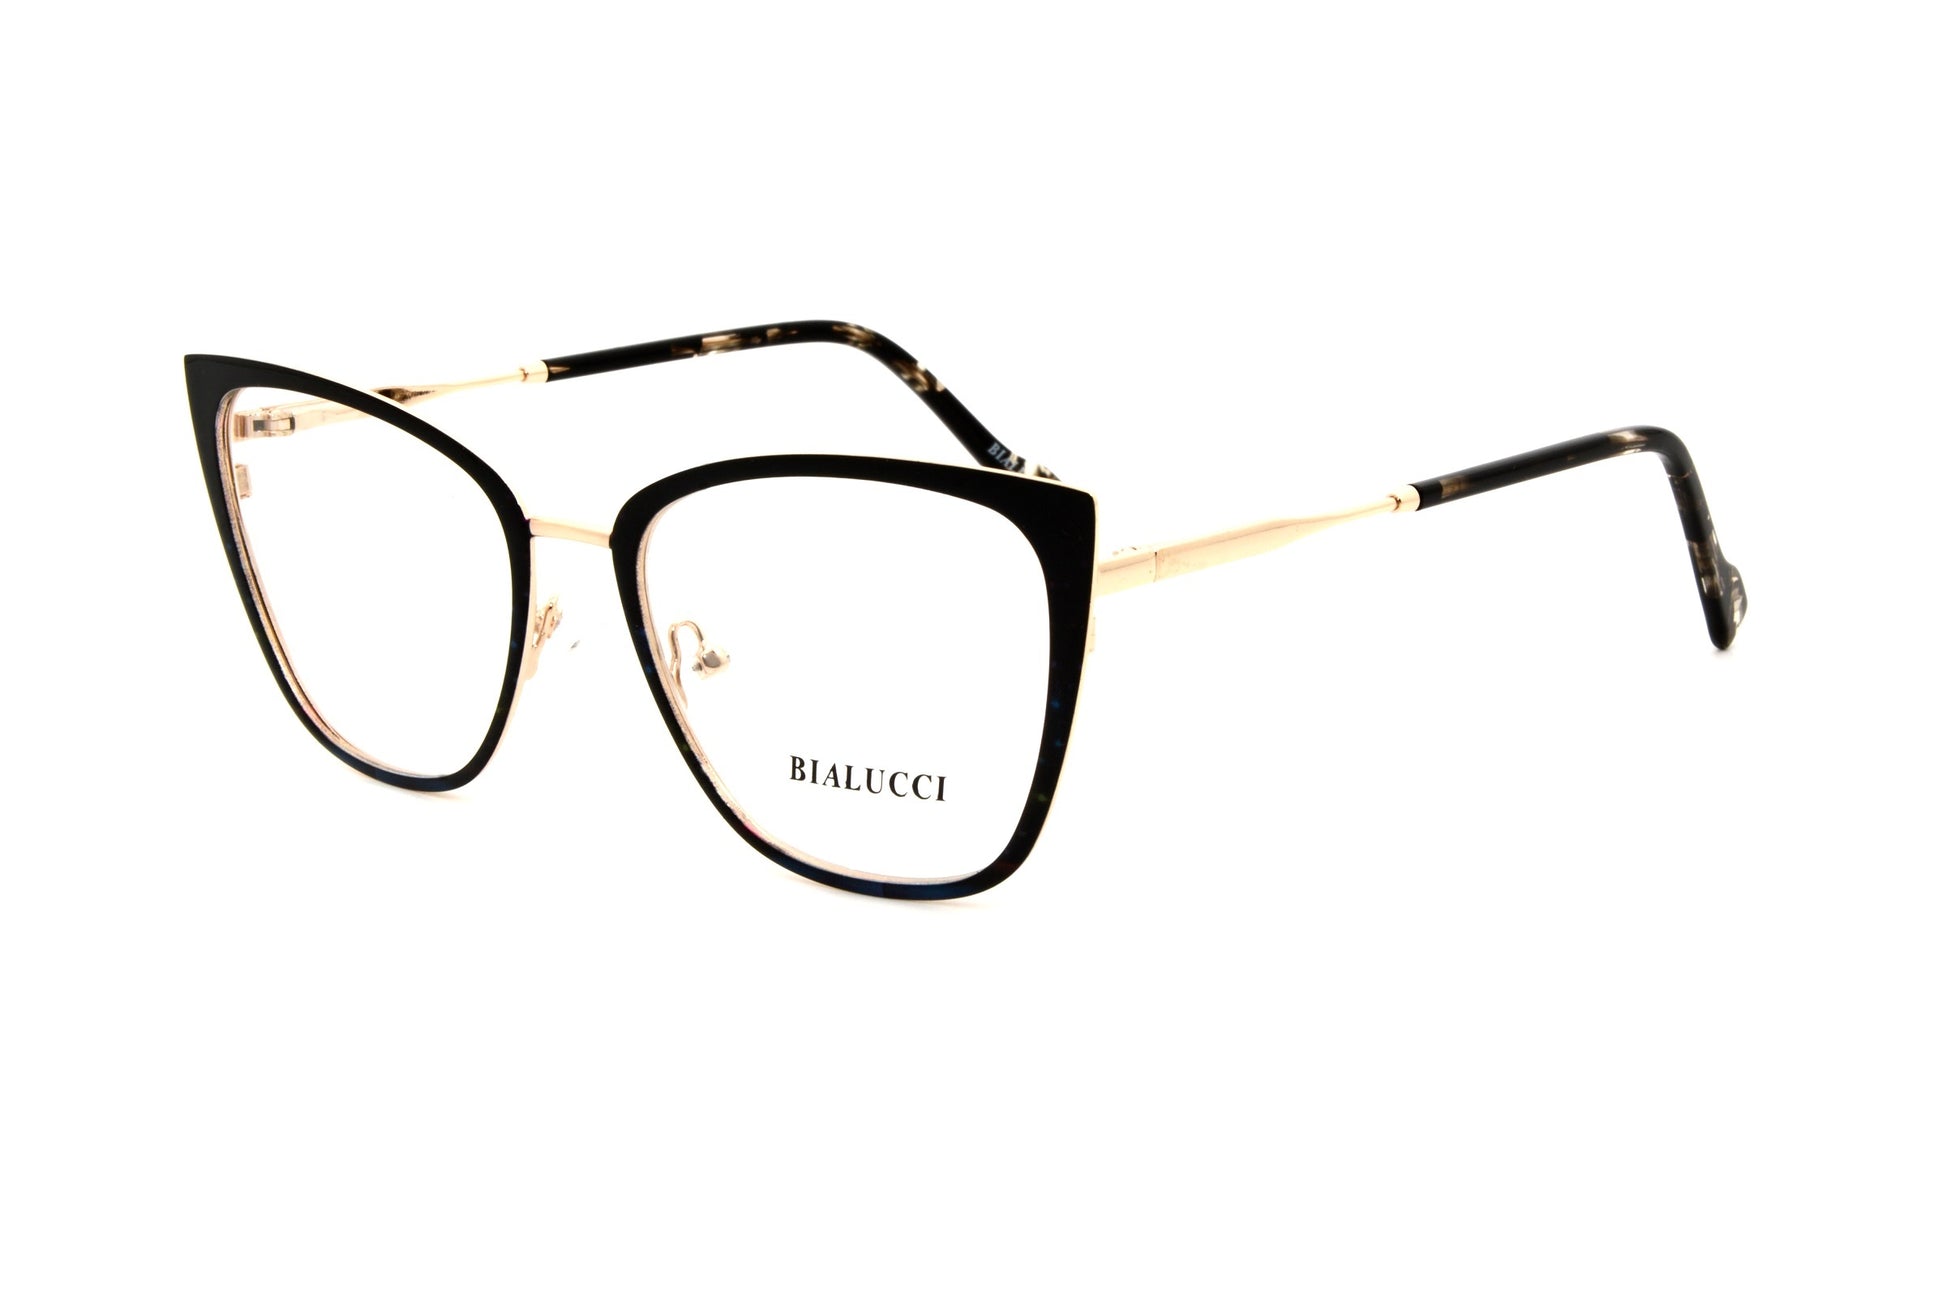 Bialucci eyewear YX 817 C5